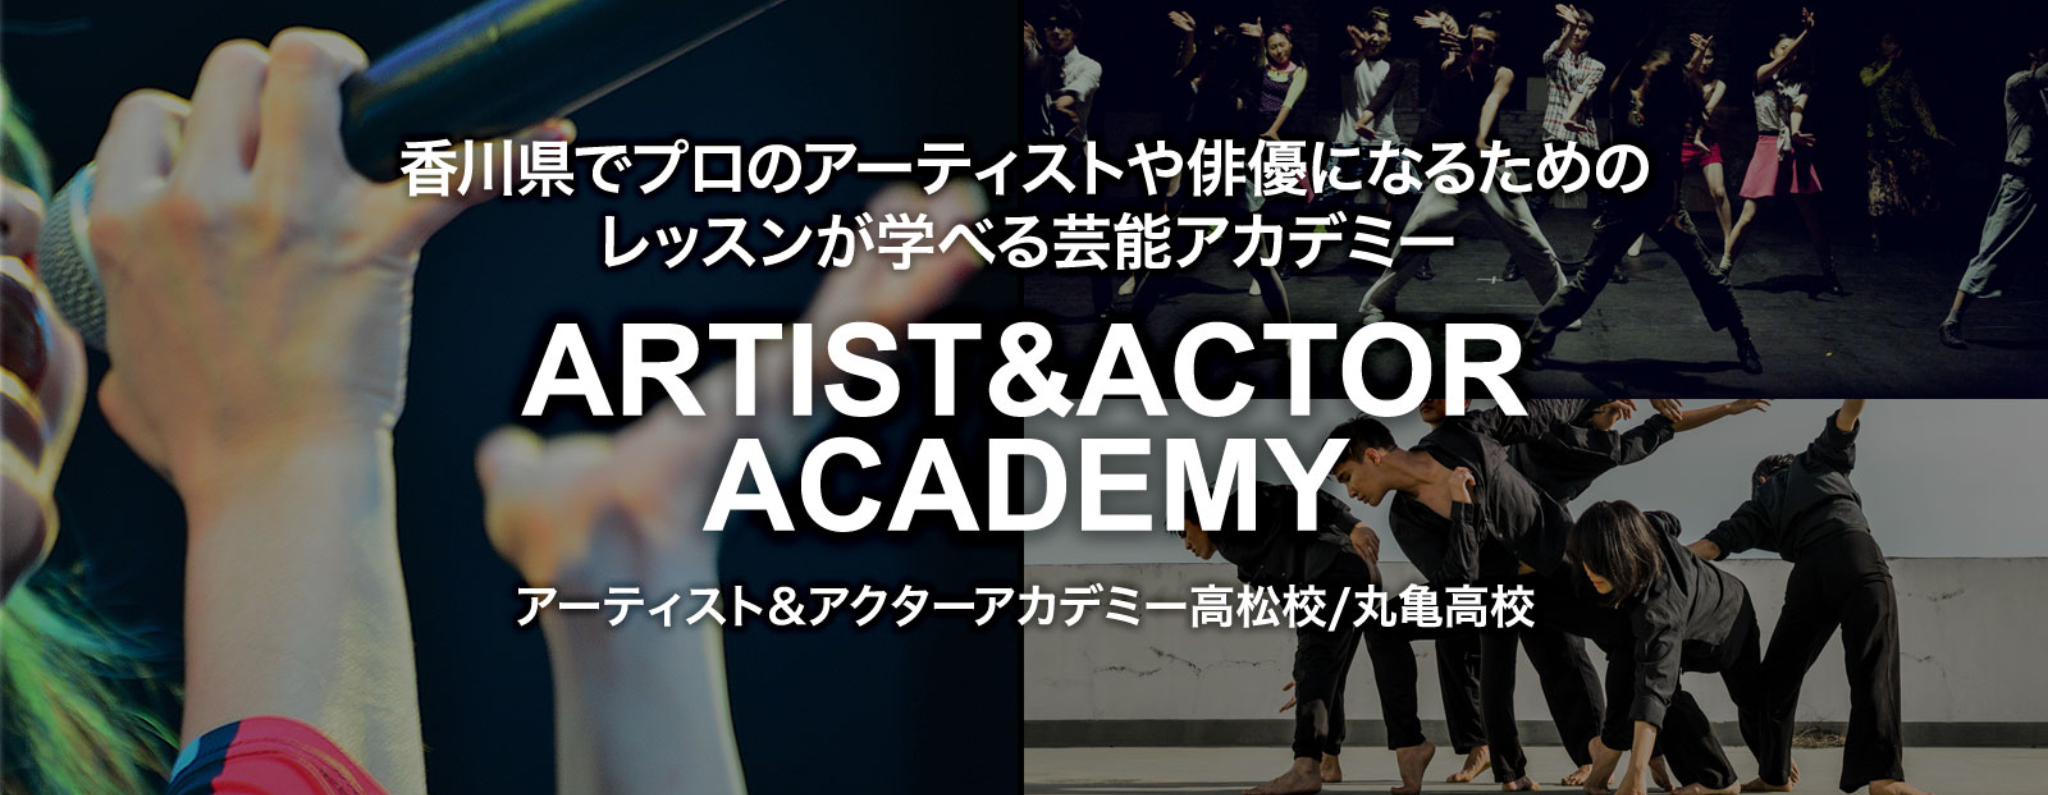 ARTIST & ACTOR ACADEMY【丸亀校】の施設画像